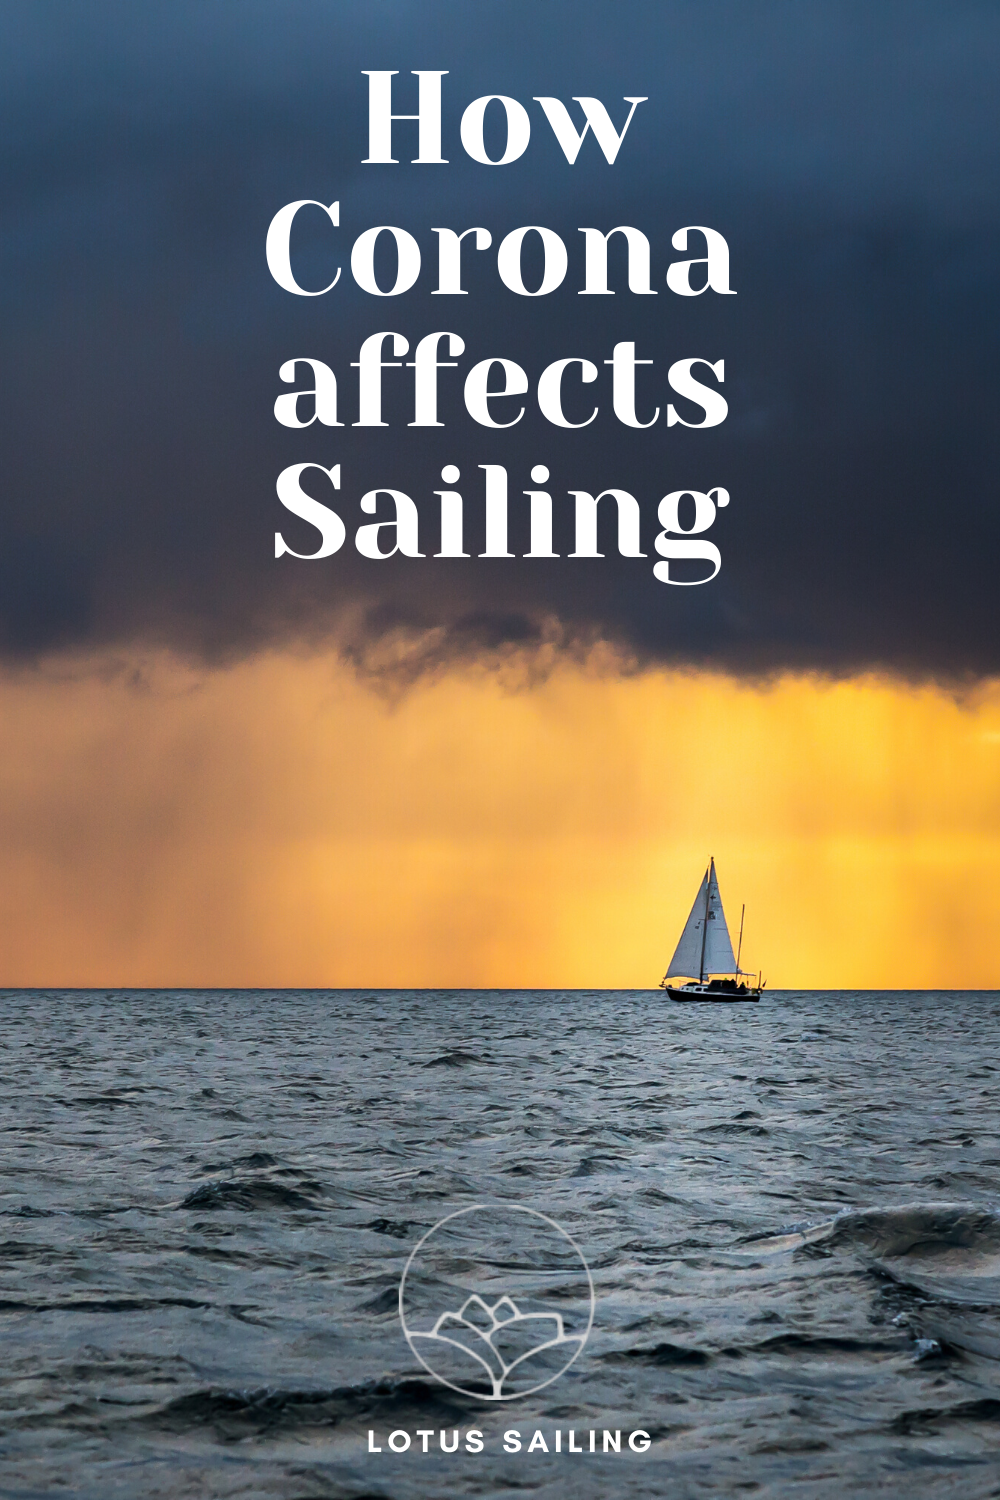 How Corona affects Sailing